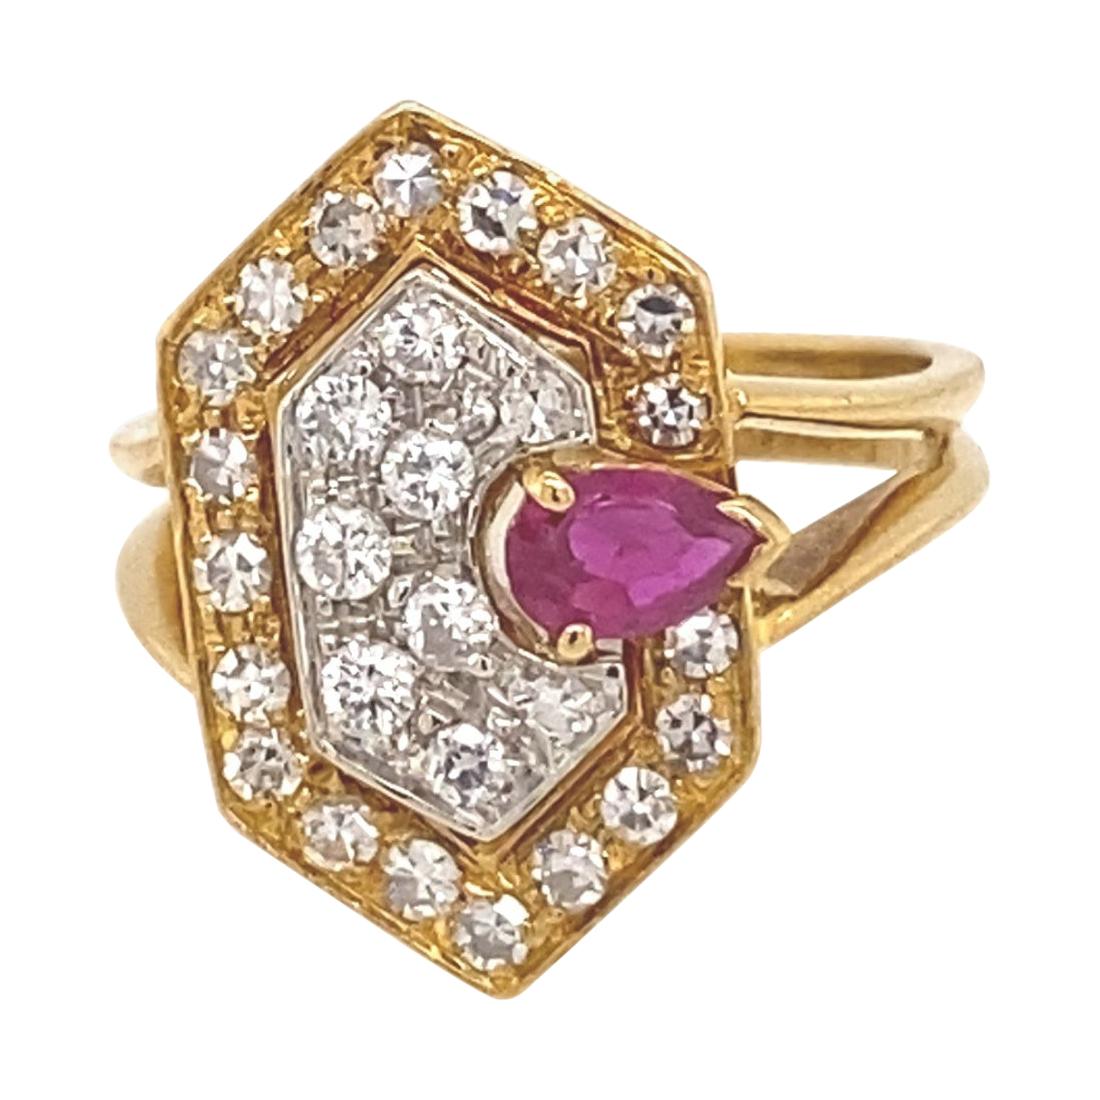 Faraone Mennella 18K Gold Ruby & Diamond Cocktail Ring